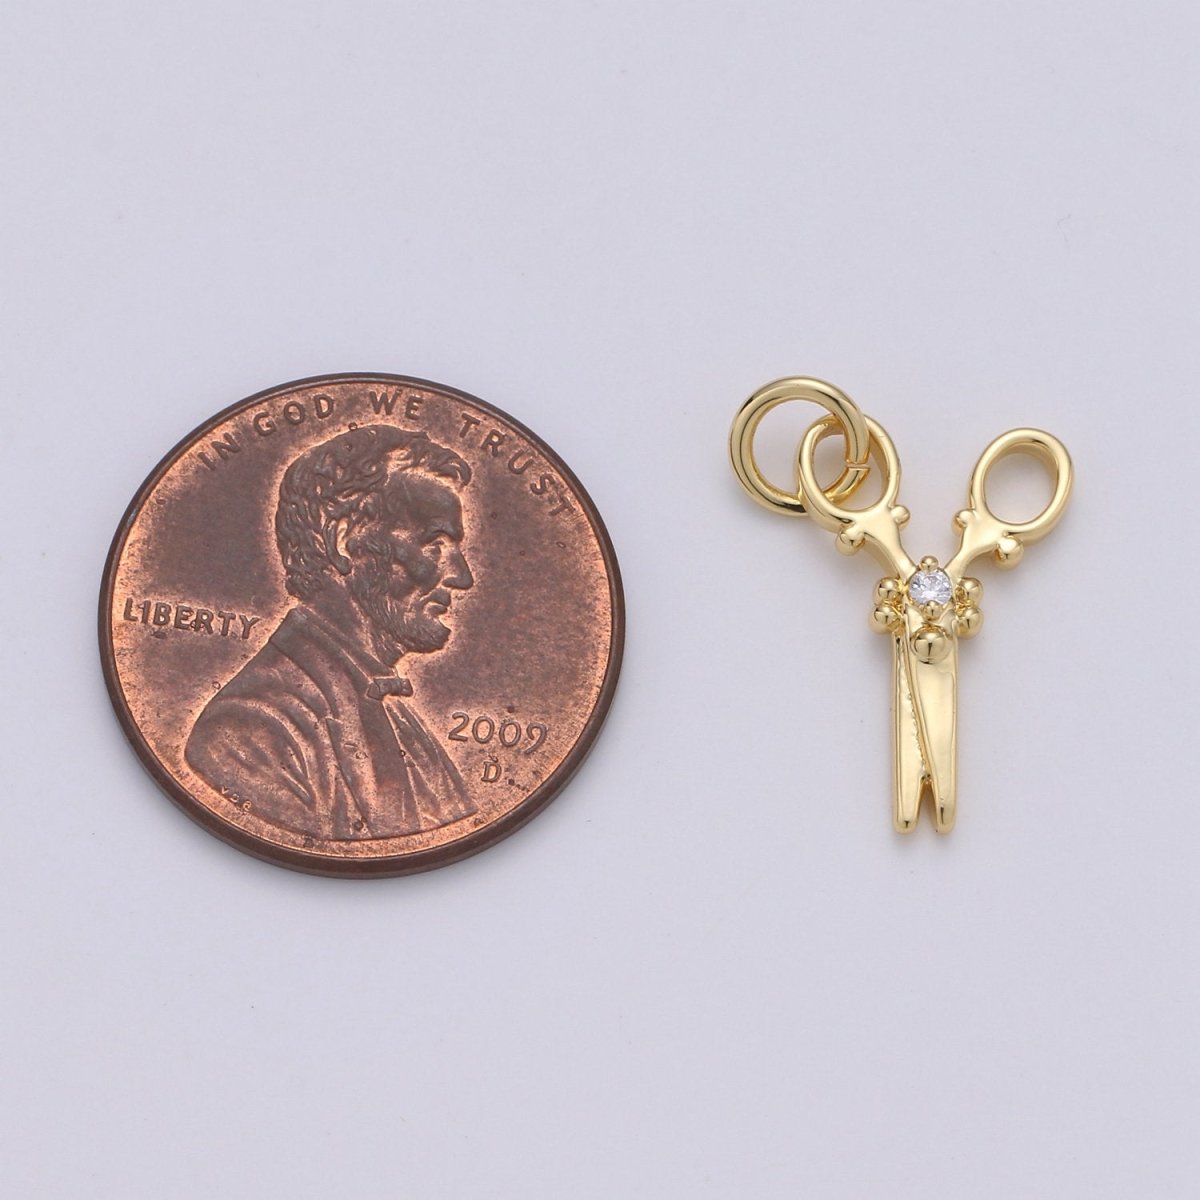 14k Gold Filled Scissor Pendant Charm, Dainty scissor charm Gold Filled Pendant, For Jewelry Making Supply D-635 - DLUXCA